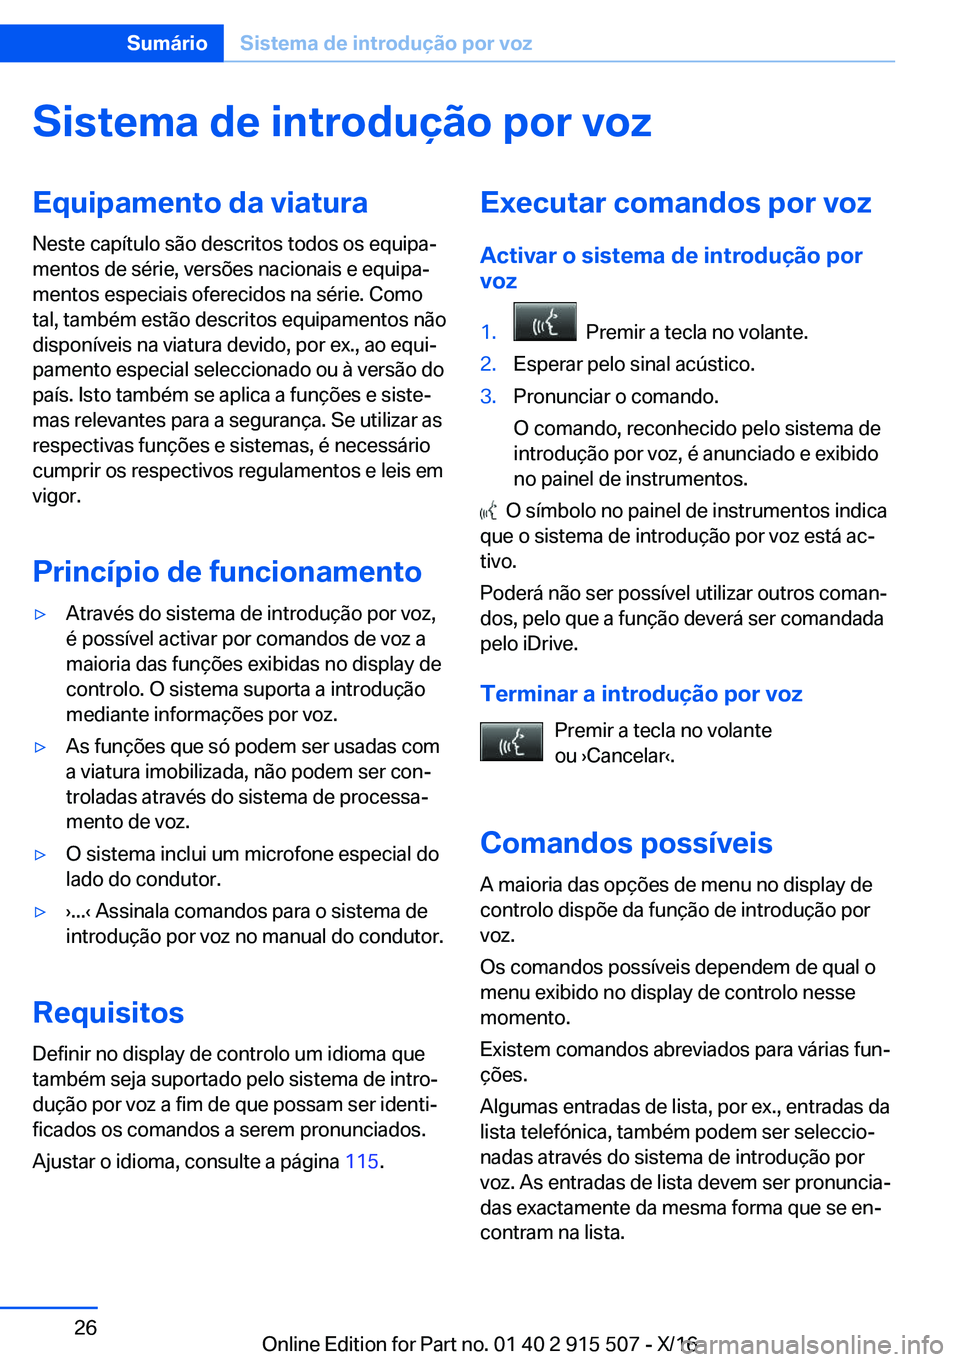 BMW X5 2017  Manual do condutor (in Portuguese) �S�i�s�t�e�m�a��d�e��i�n�t�r�o�d�u�